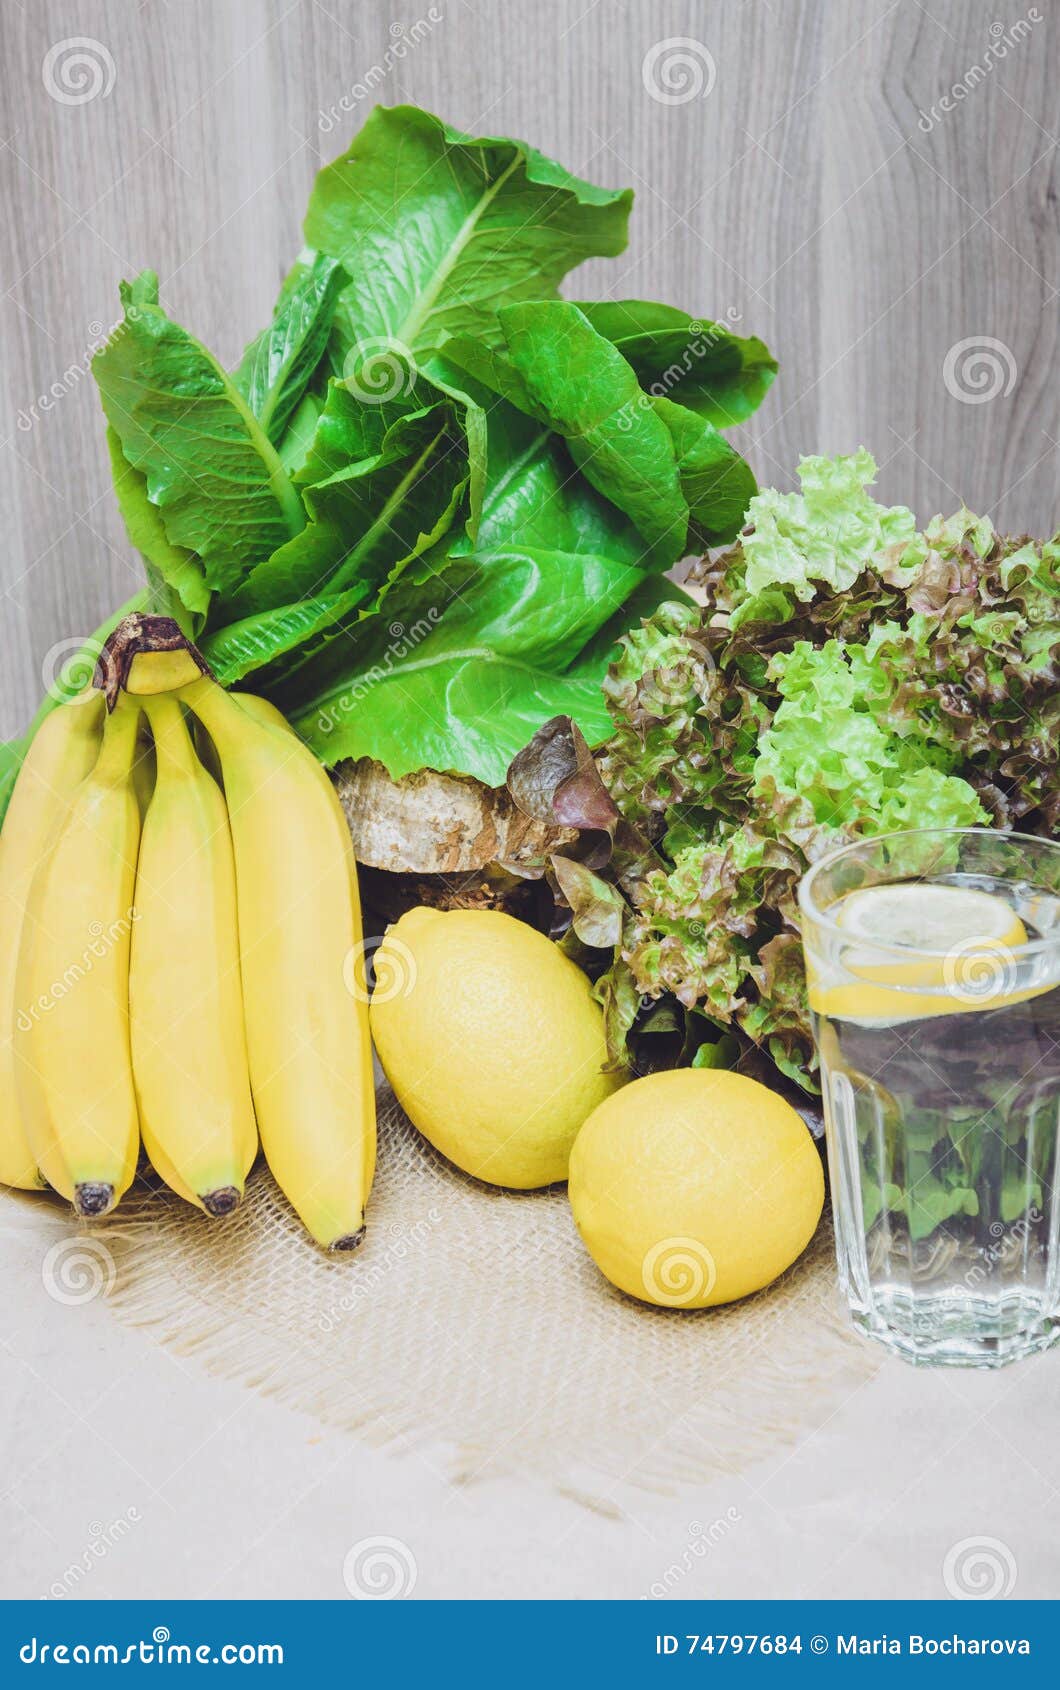 fresh-lemon-water-yellow-lemons-bananas-green-plants-salad-diet-healthy-concept-still-life-home-made-vitamin-74797684.jpg